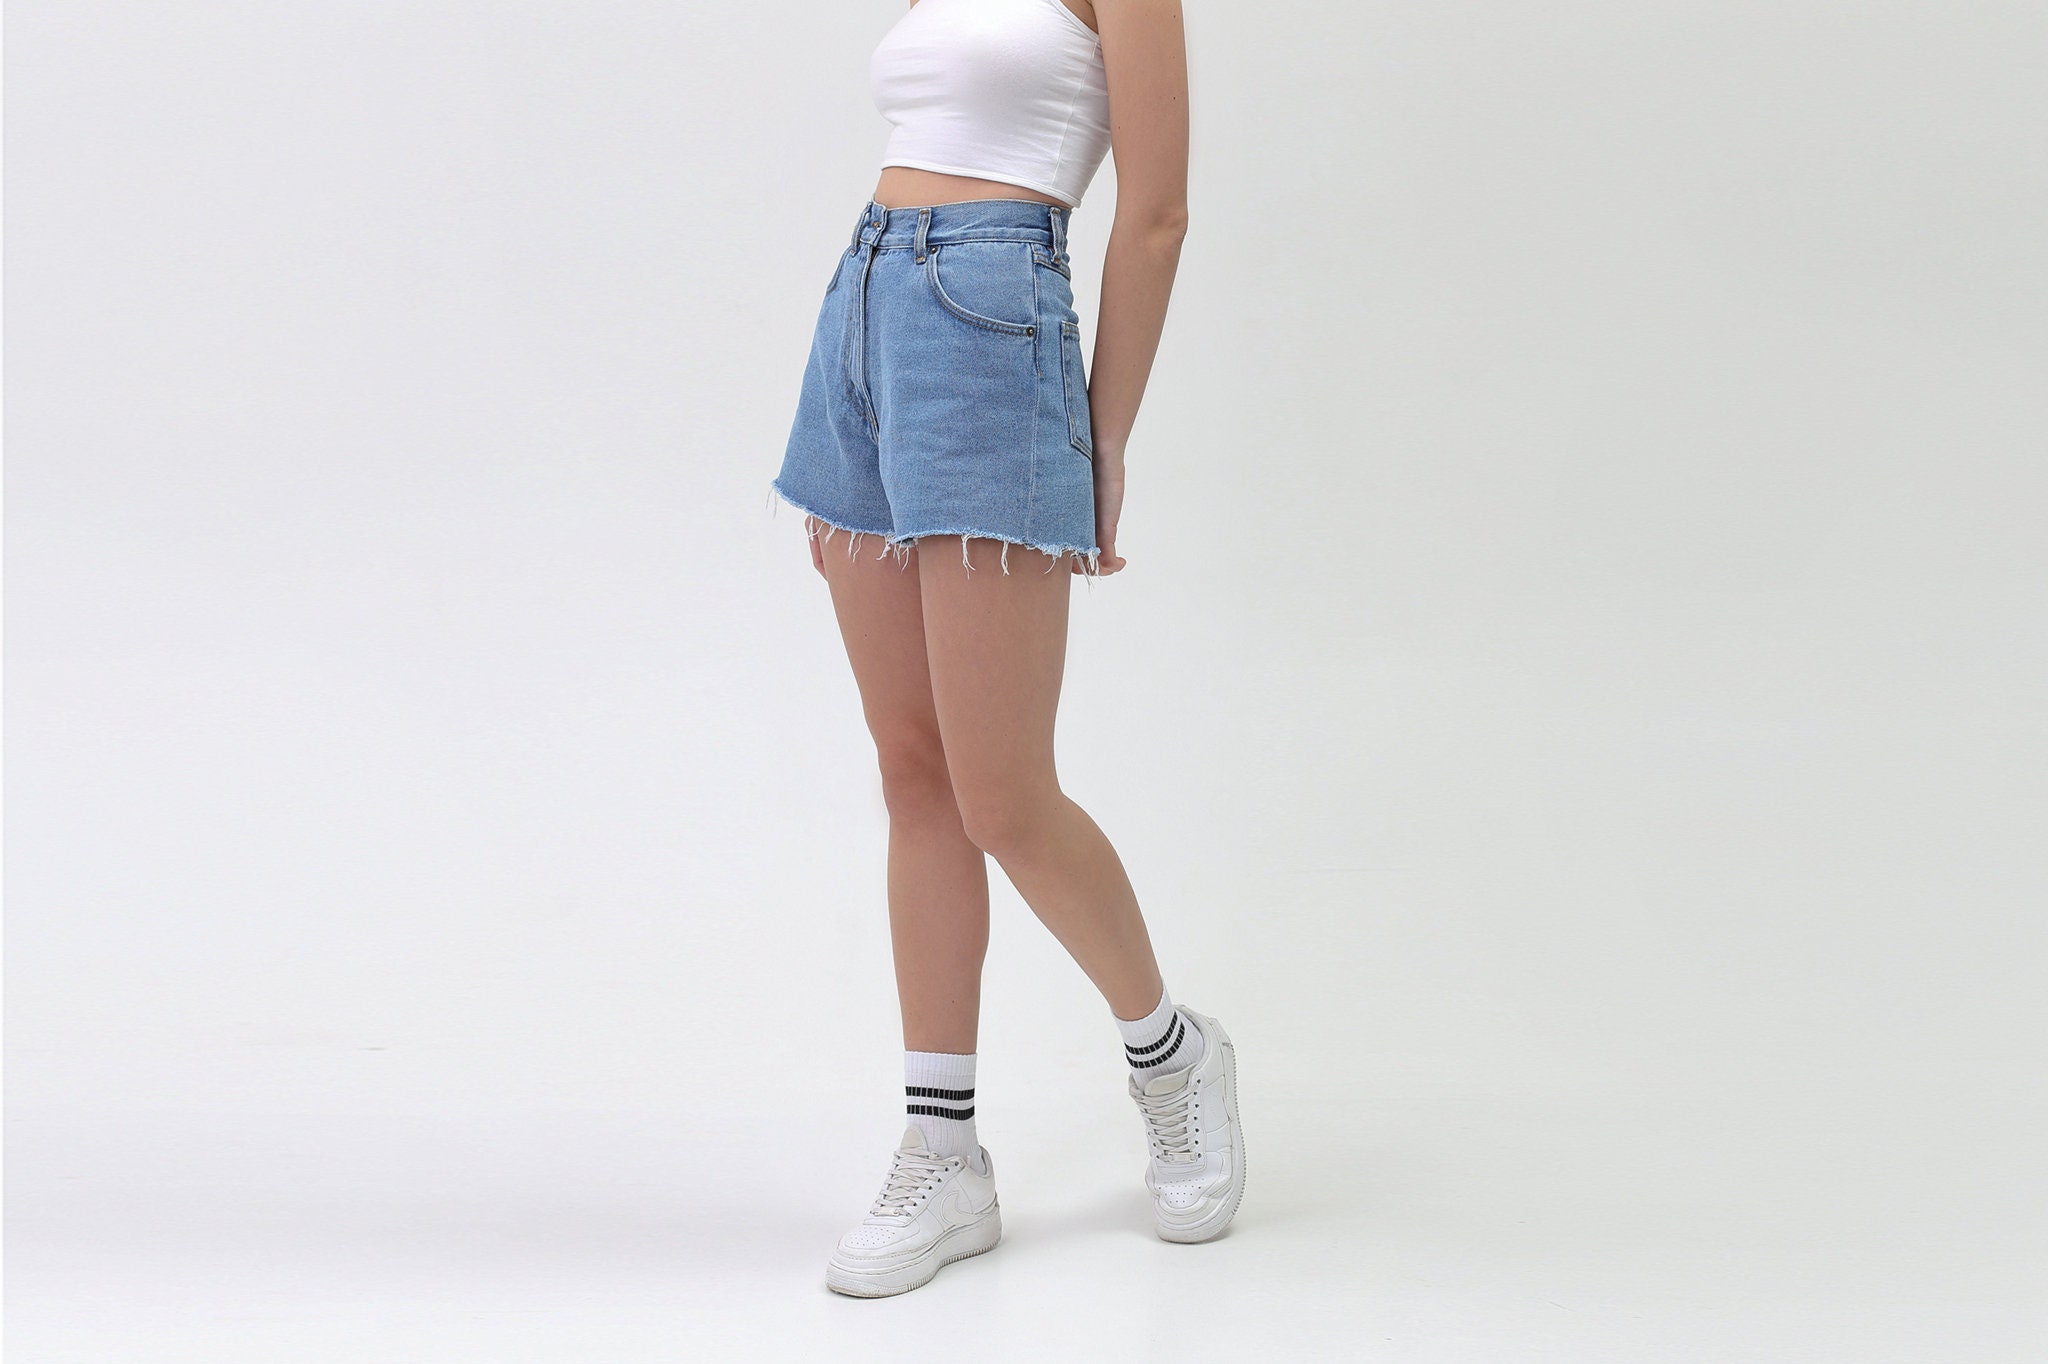 Cropped Shorts for Women Womens Shorts Denim Shorts Women | Etsy